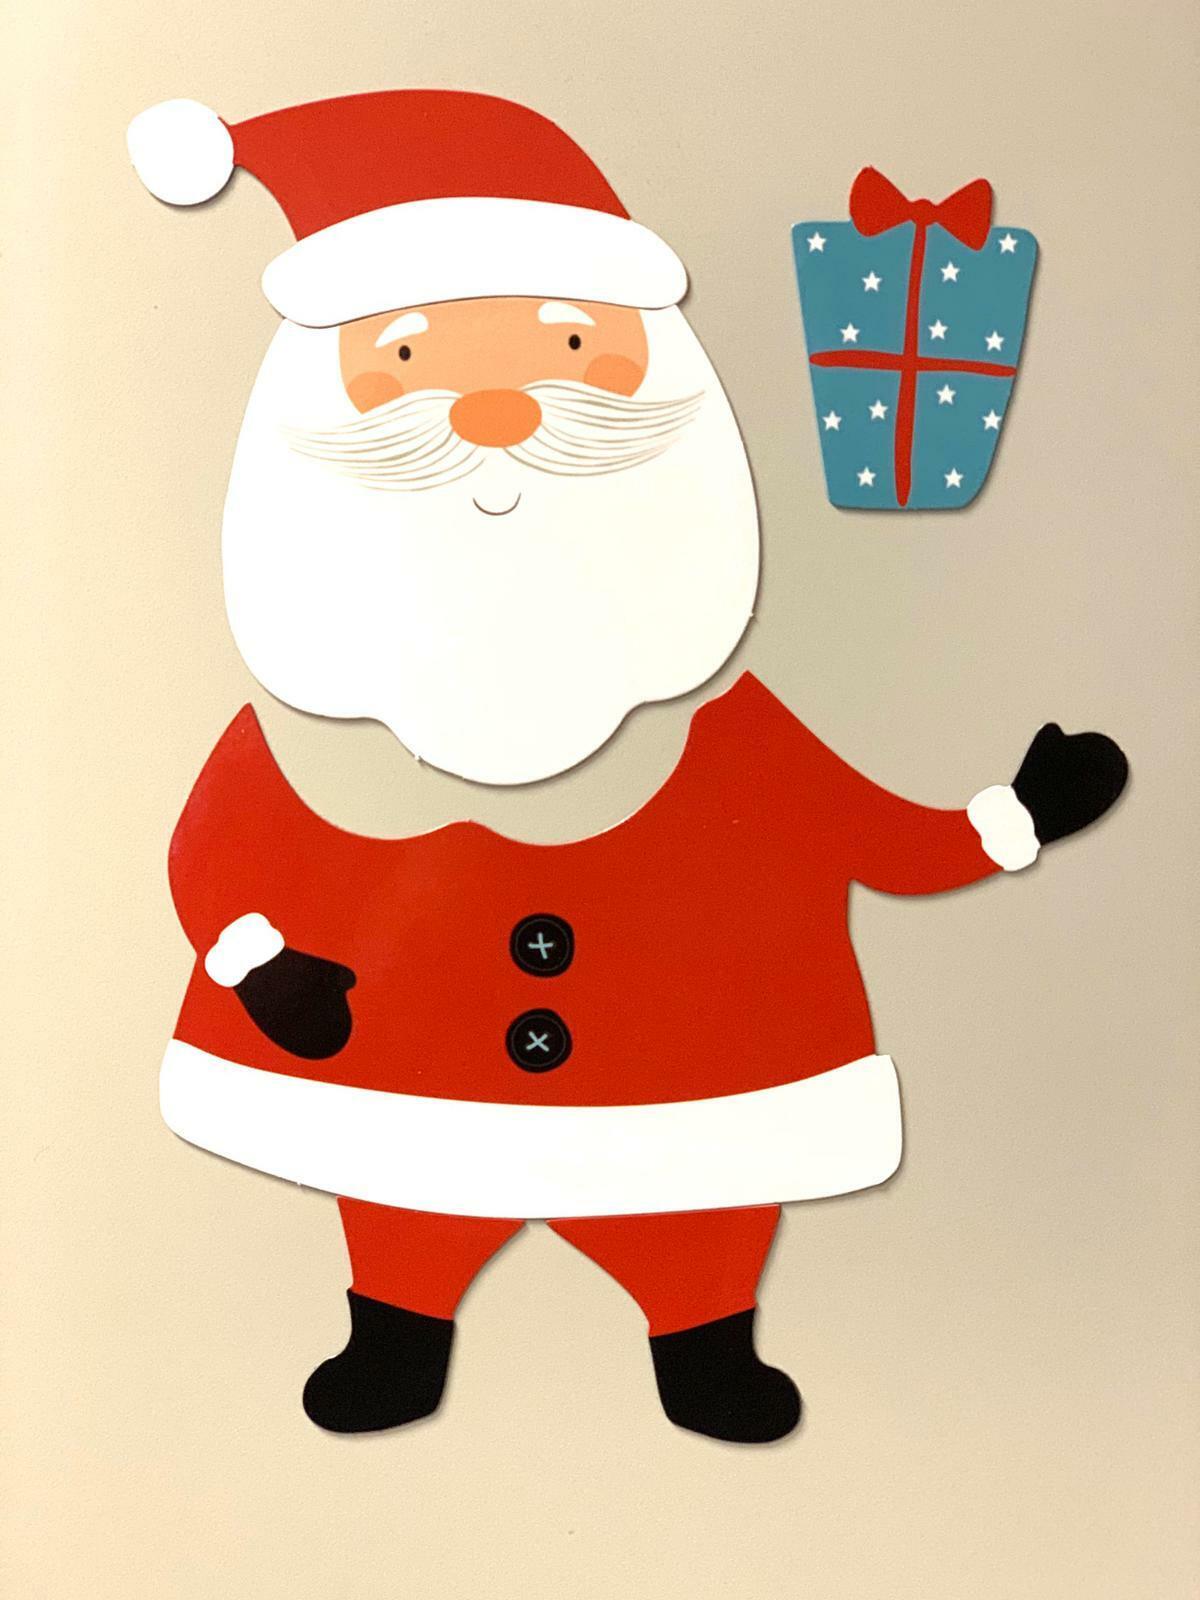 Beclen Harp Cute Christmas/Xmas Santa/Snowman/Reindeer Magnets For Fun Decoration Of Fridge/Freezer/Refrigerator/Dishwasher